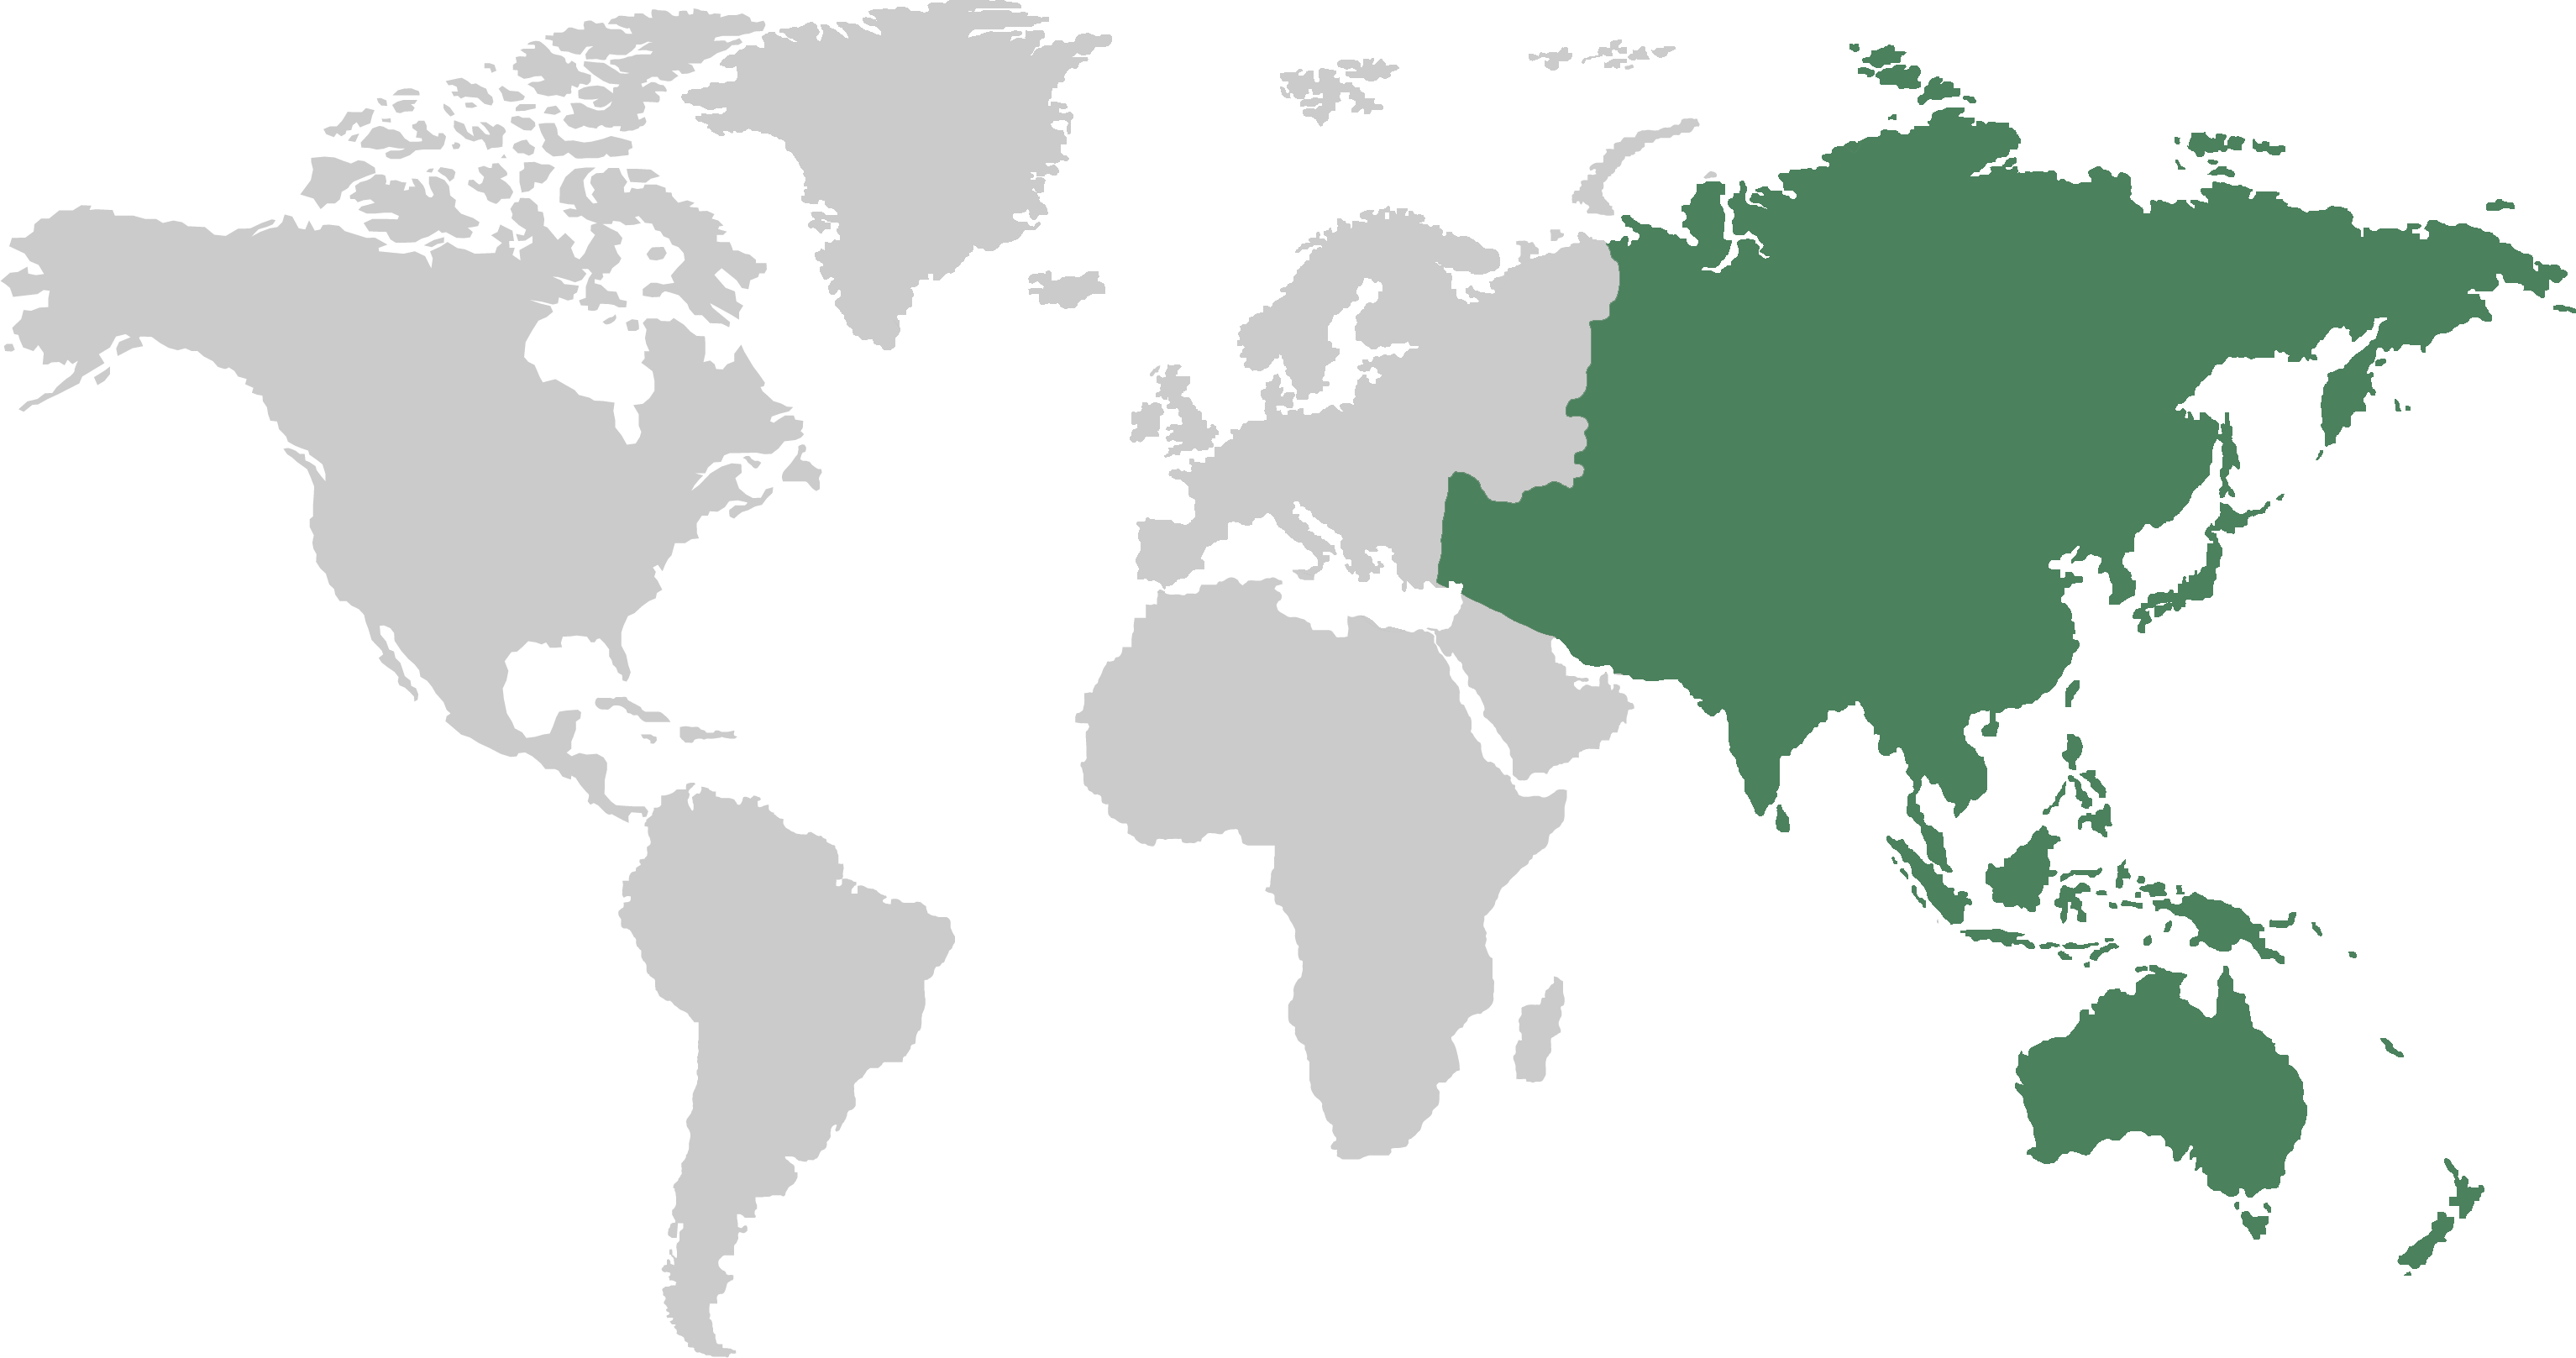 Asia and Australia